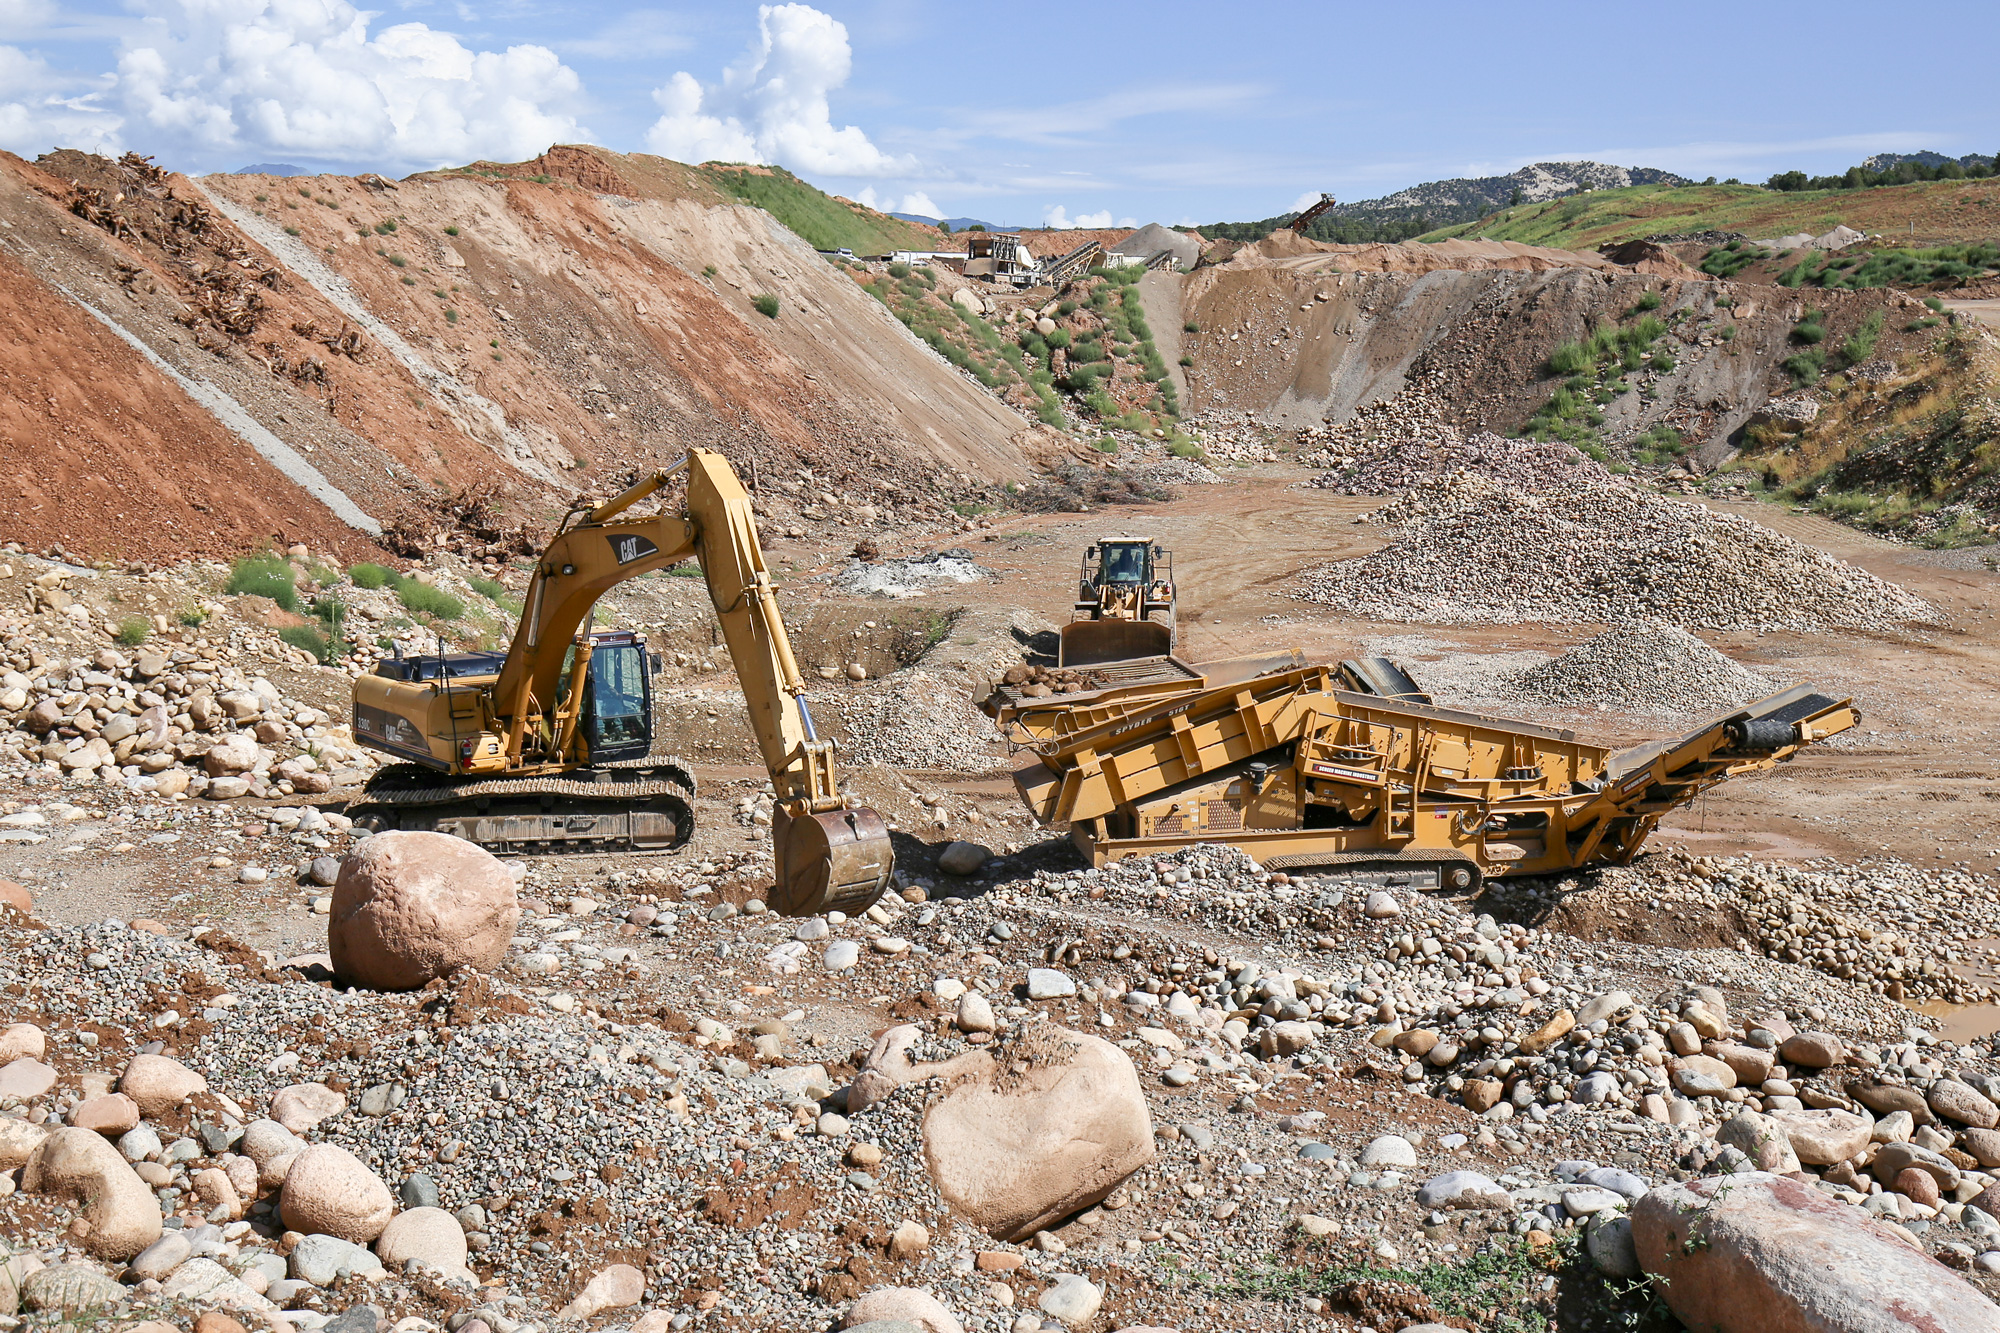 Aggregate quarry near Durango, Colorado. Photo credit: Mike O'Keeffe for the CGS.